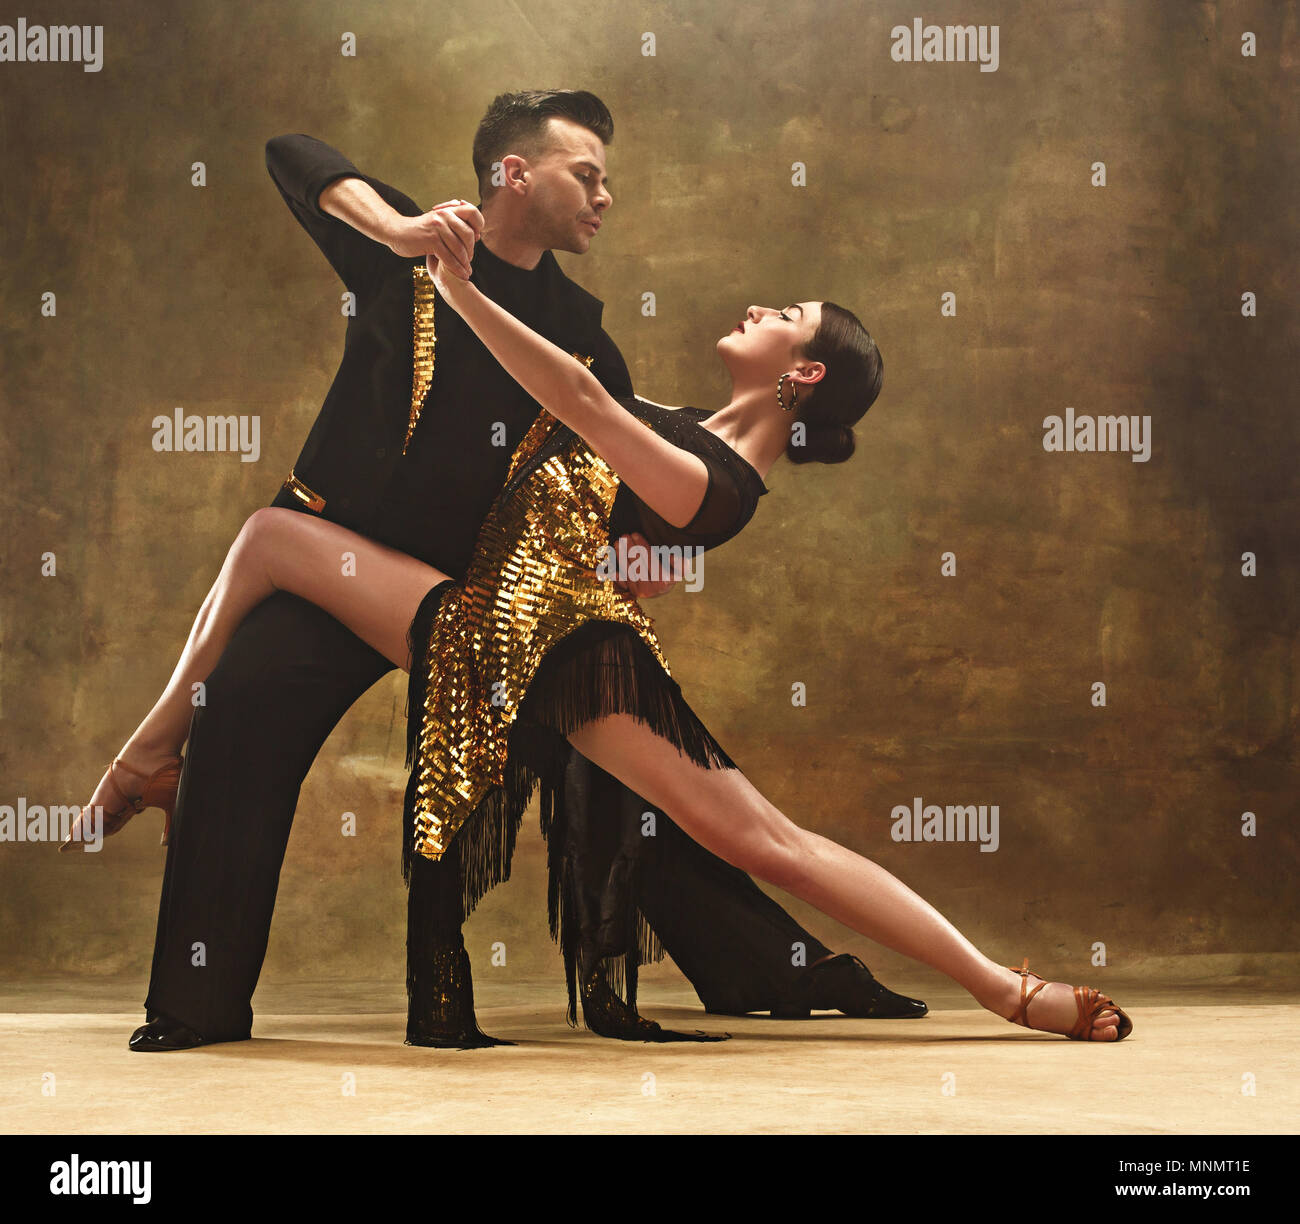 Dance ballroom couple in gold dress dancing on studio background. Stock Photo